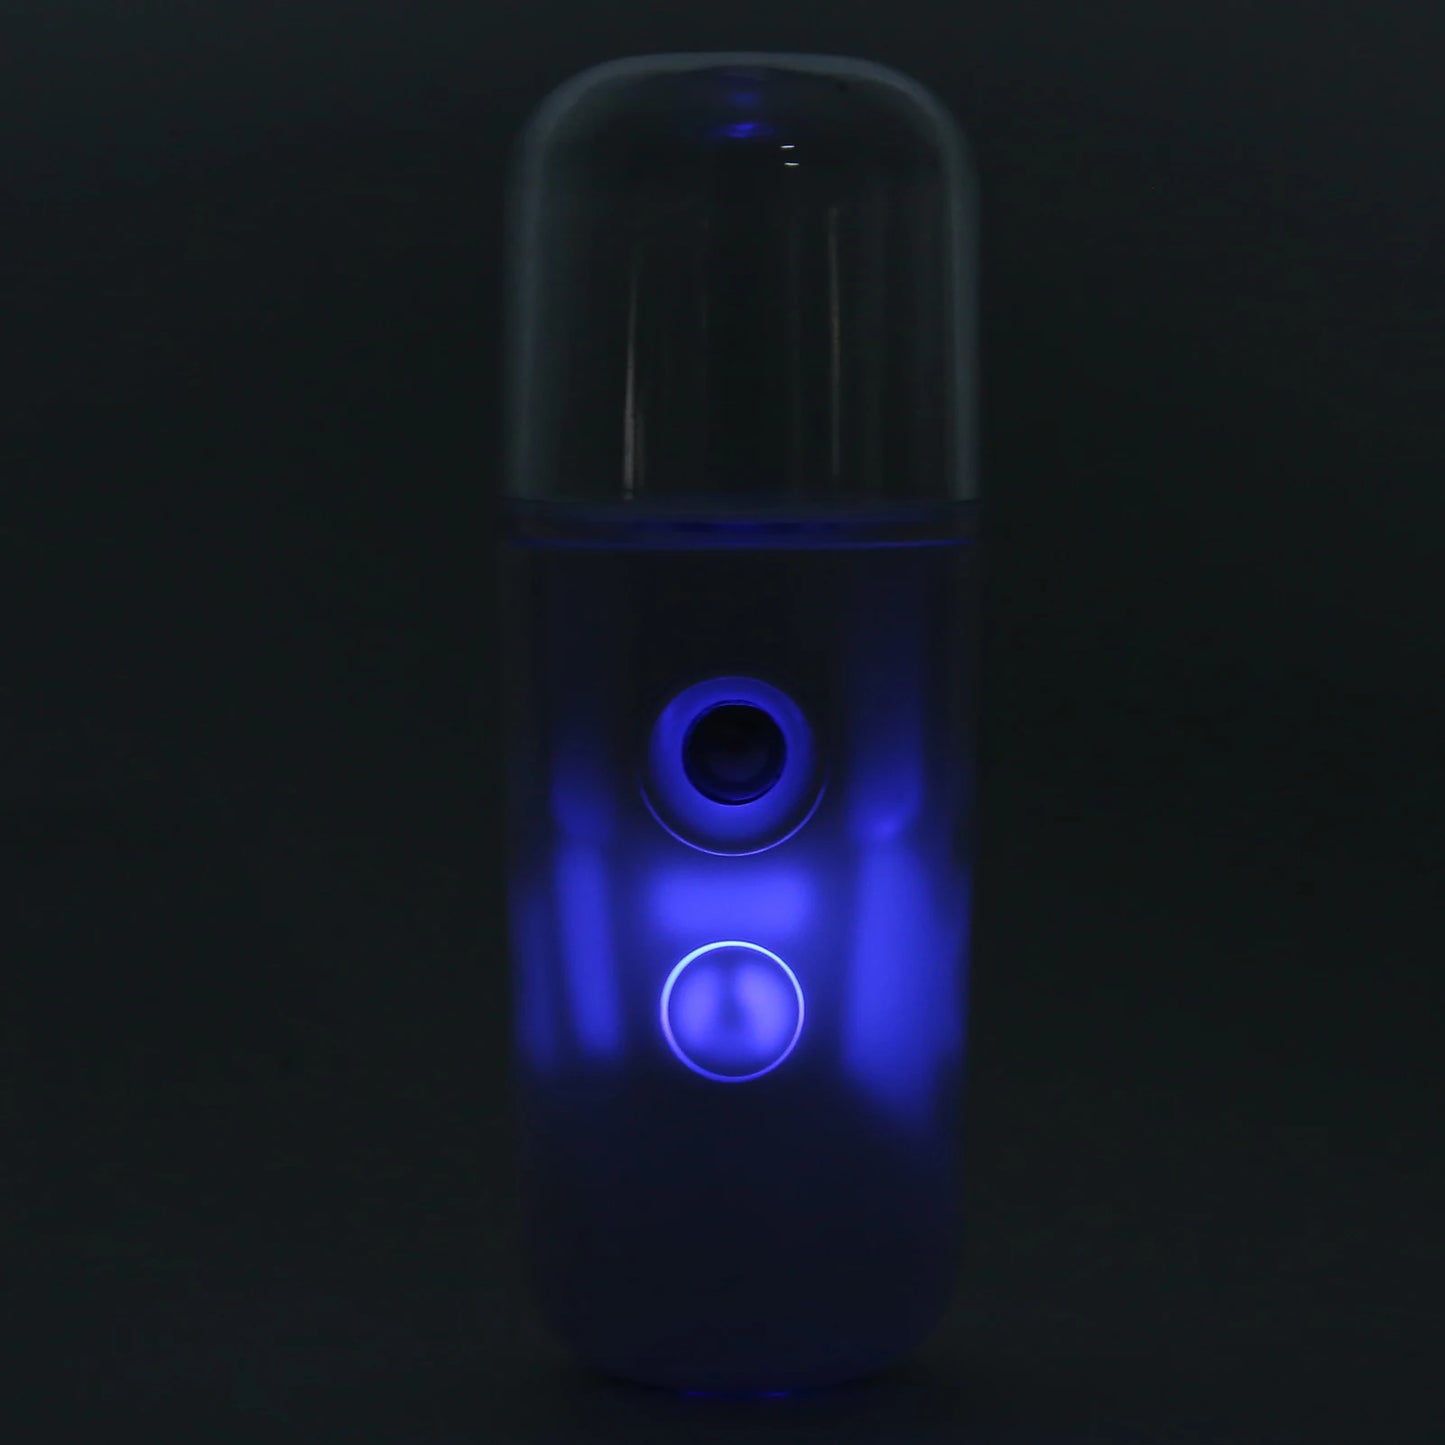 Face Sprayer Nano Facial Mist Sprayer Mini Portable Face Moisturizing Spray for Skin Care 30ml Nano Sprayer Skin Care Sprayer